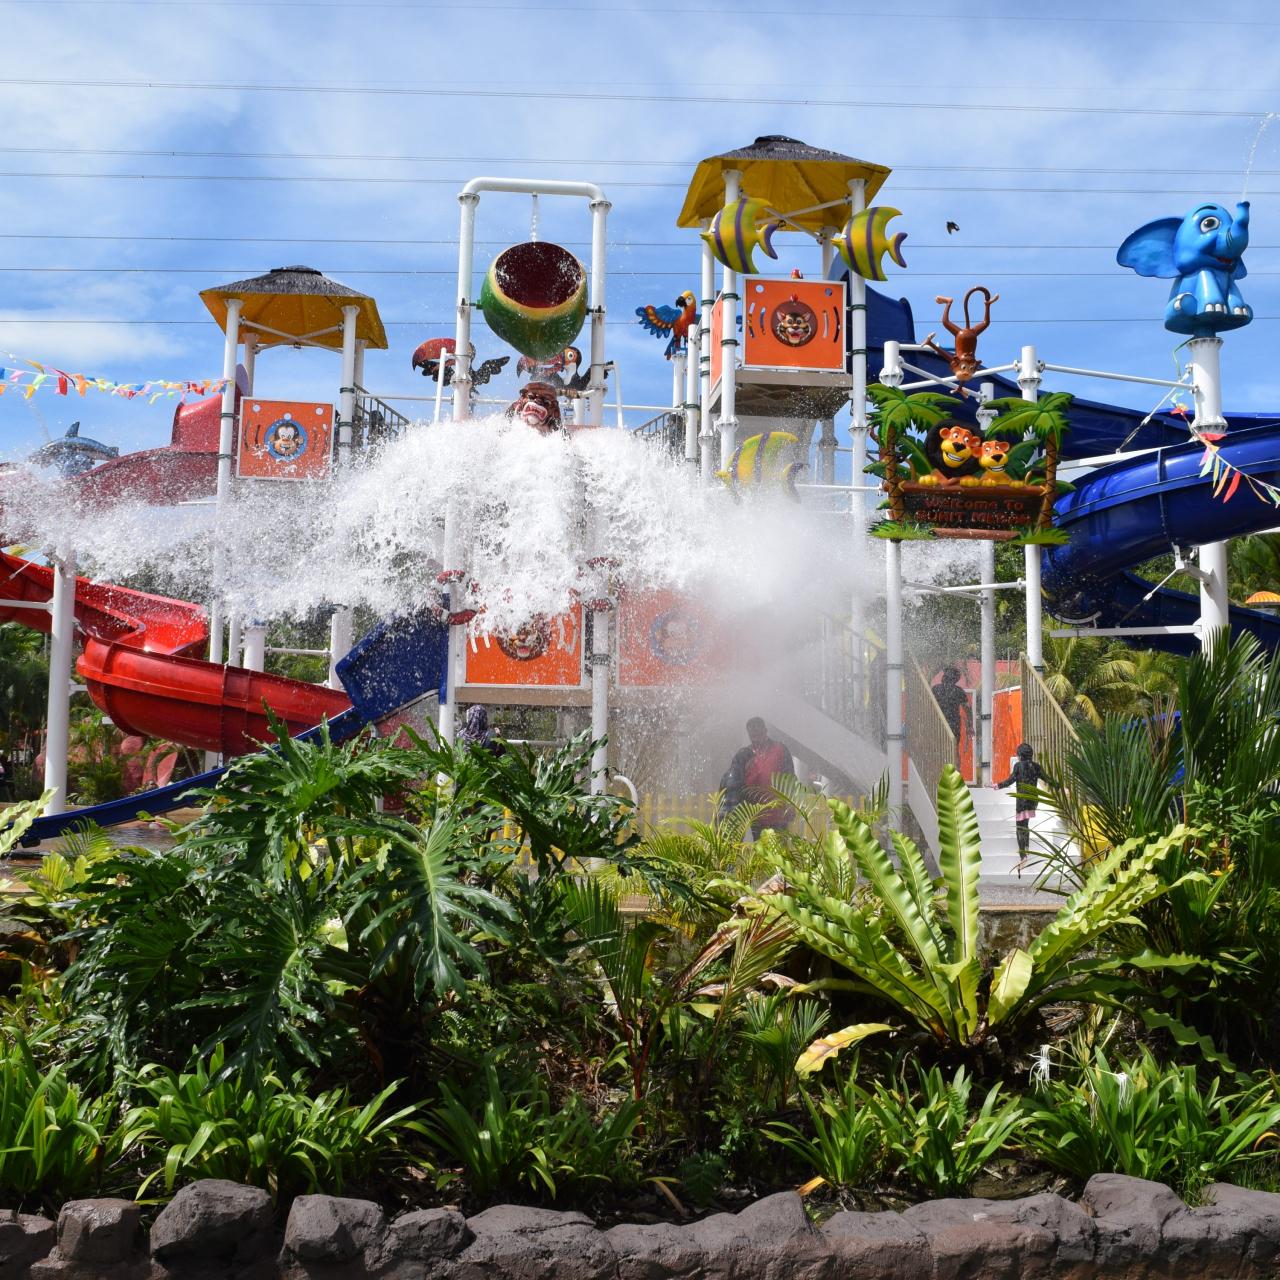 [E-Ticket] Bukit Merah Laketown Water Theme park